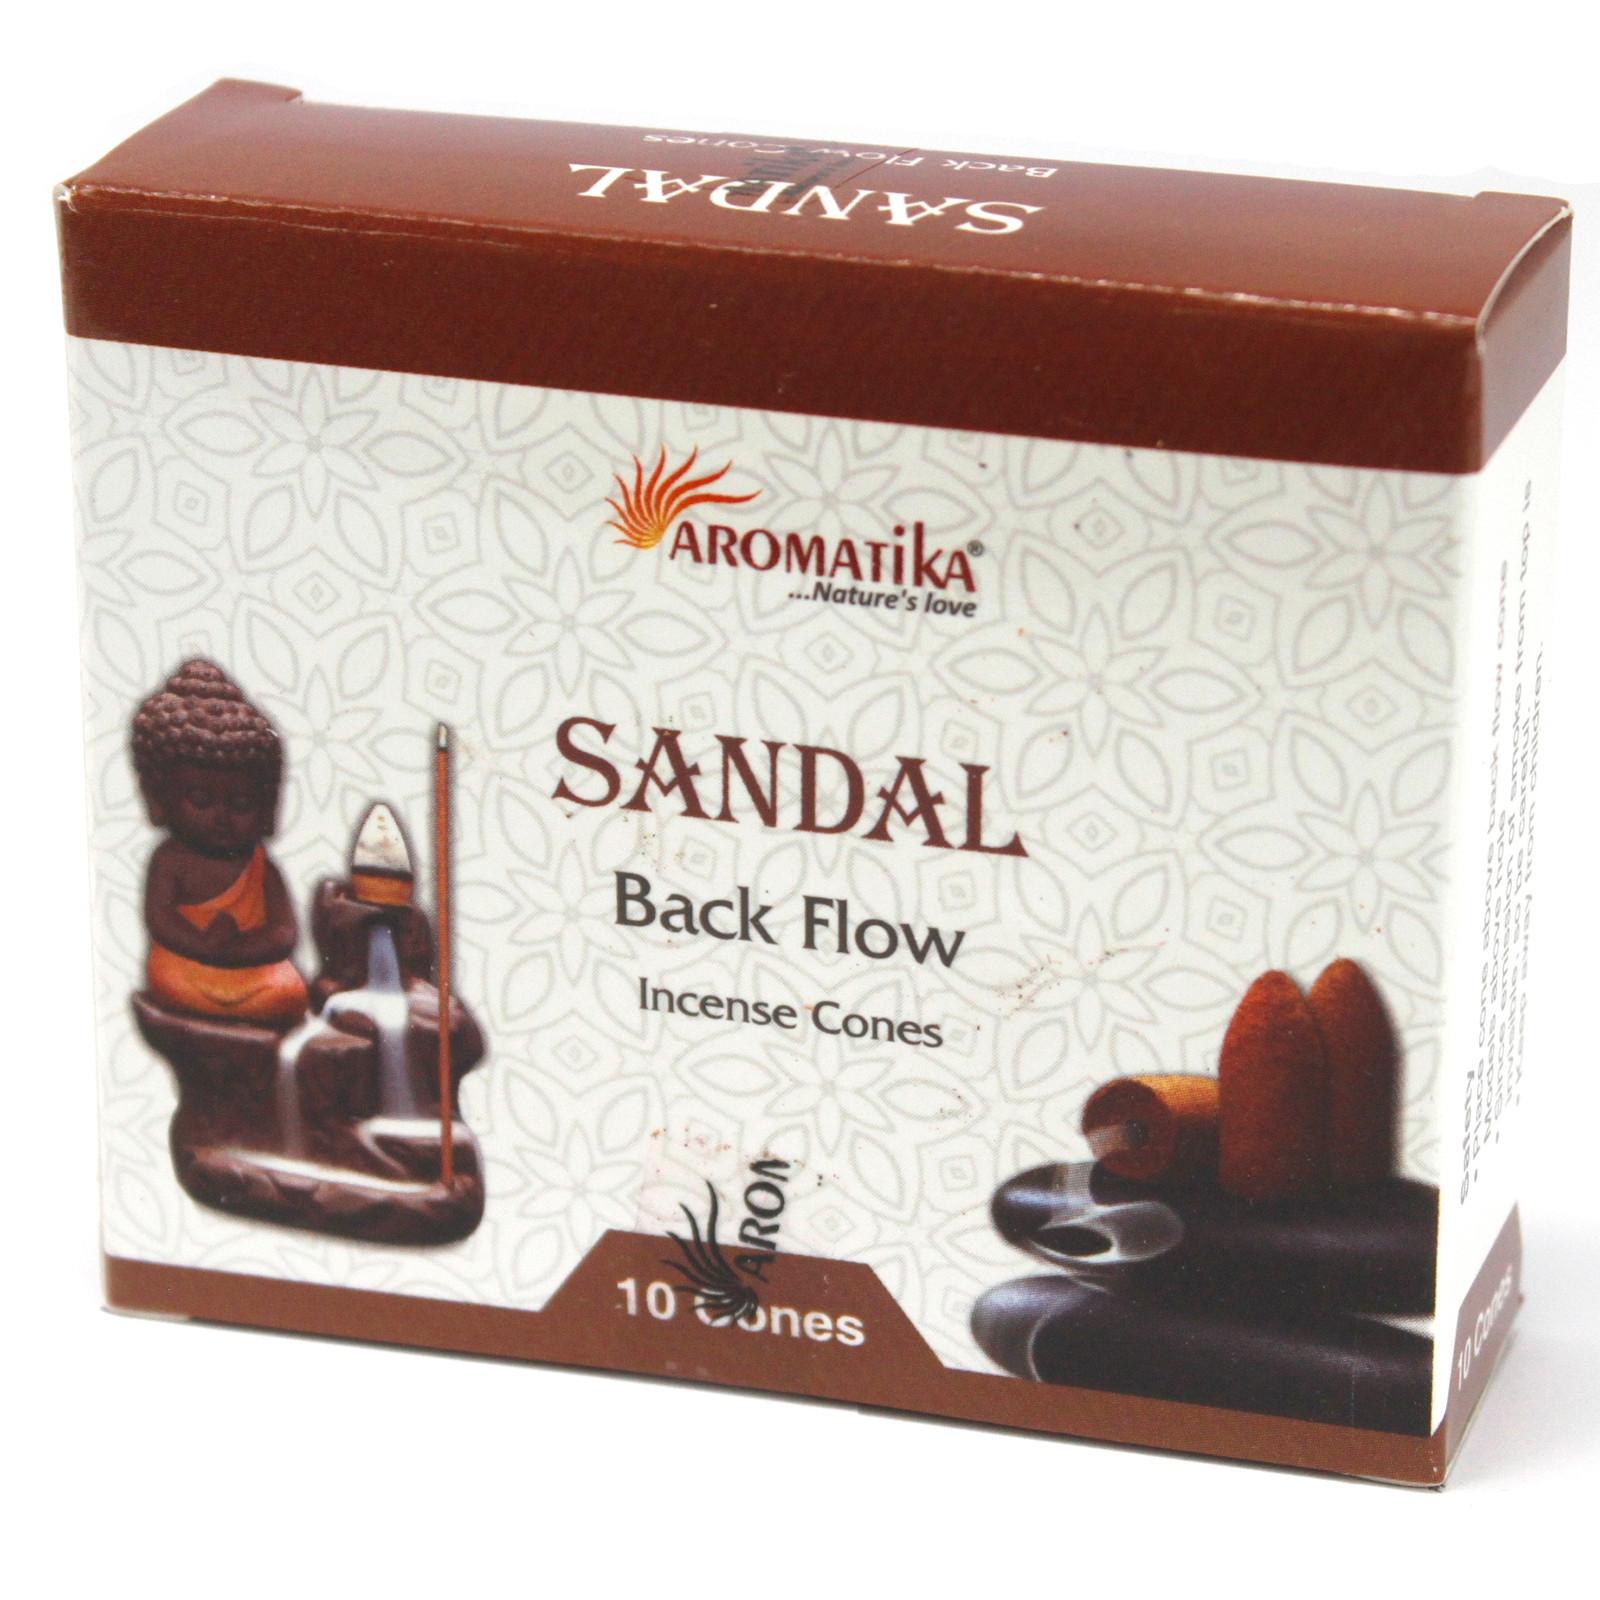 Aromatica Sandal Backflow Incense Cones